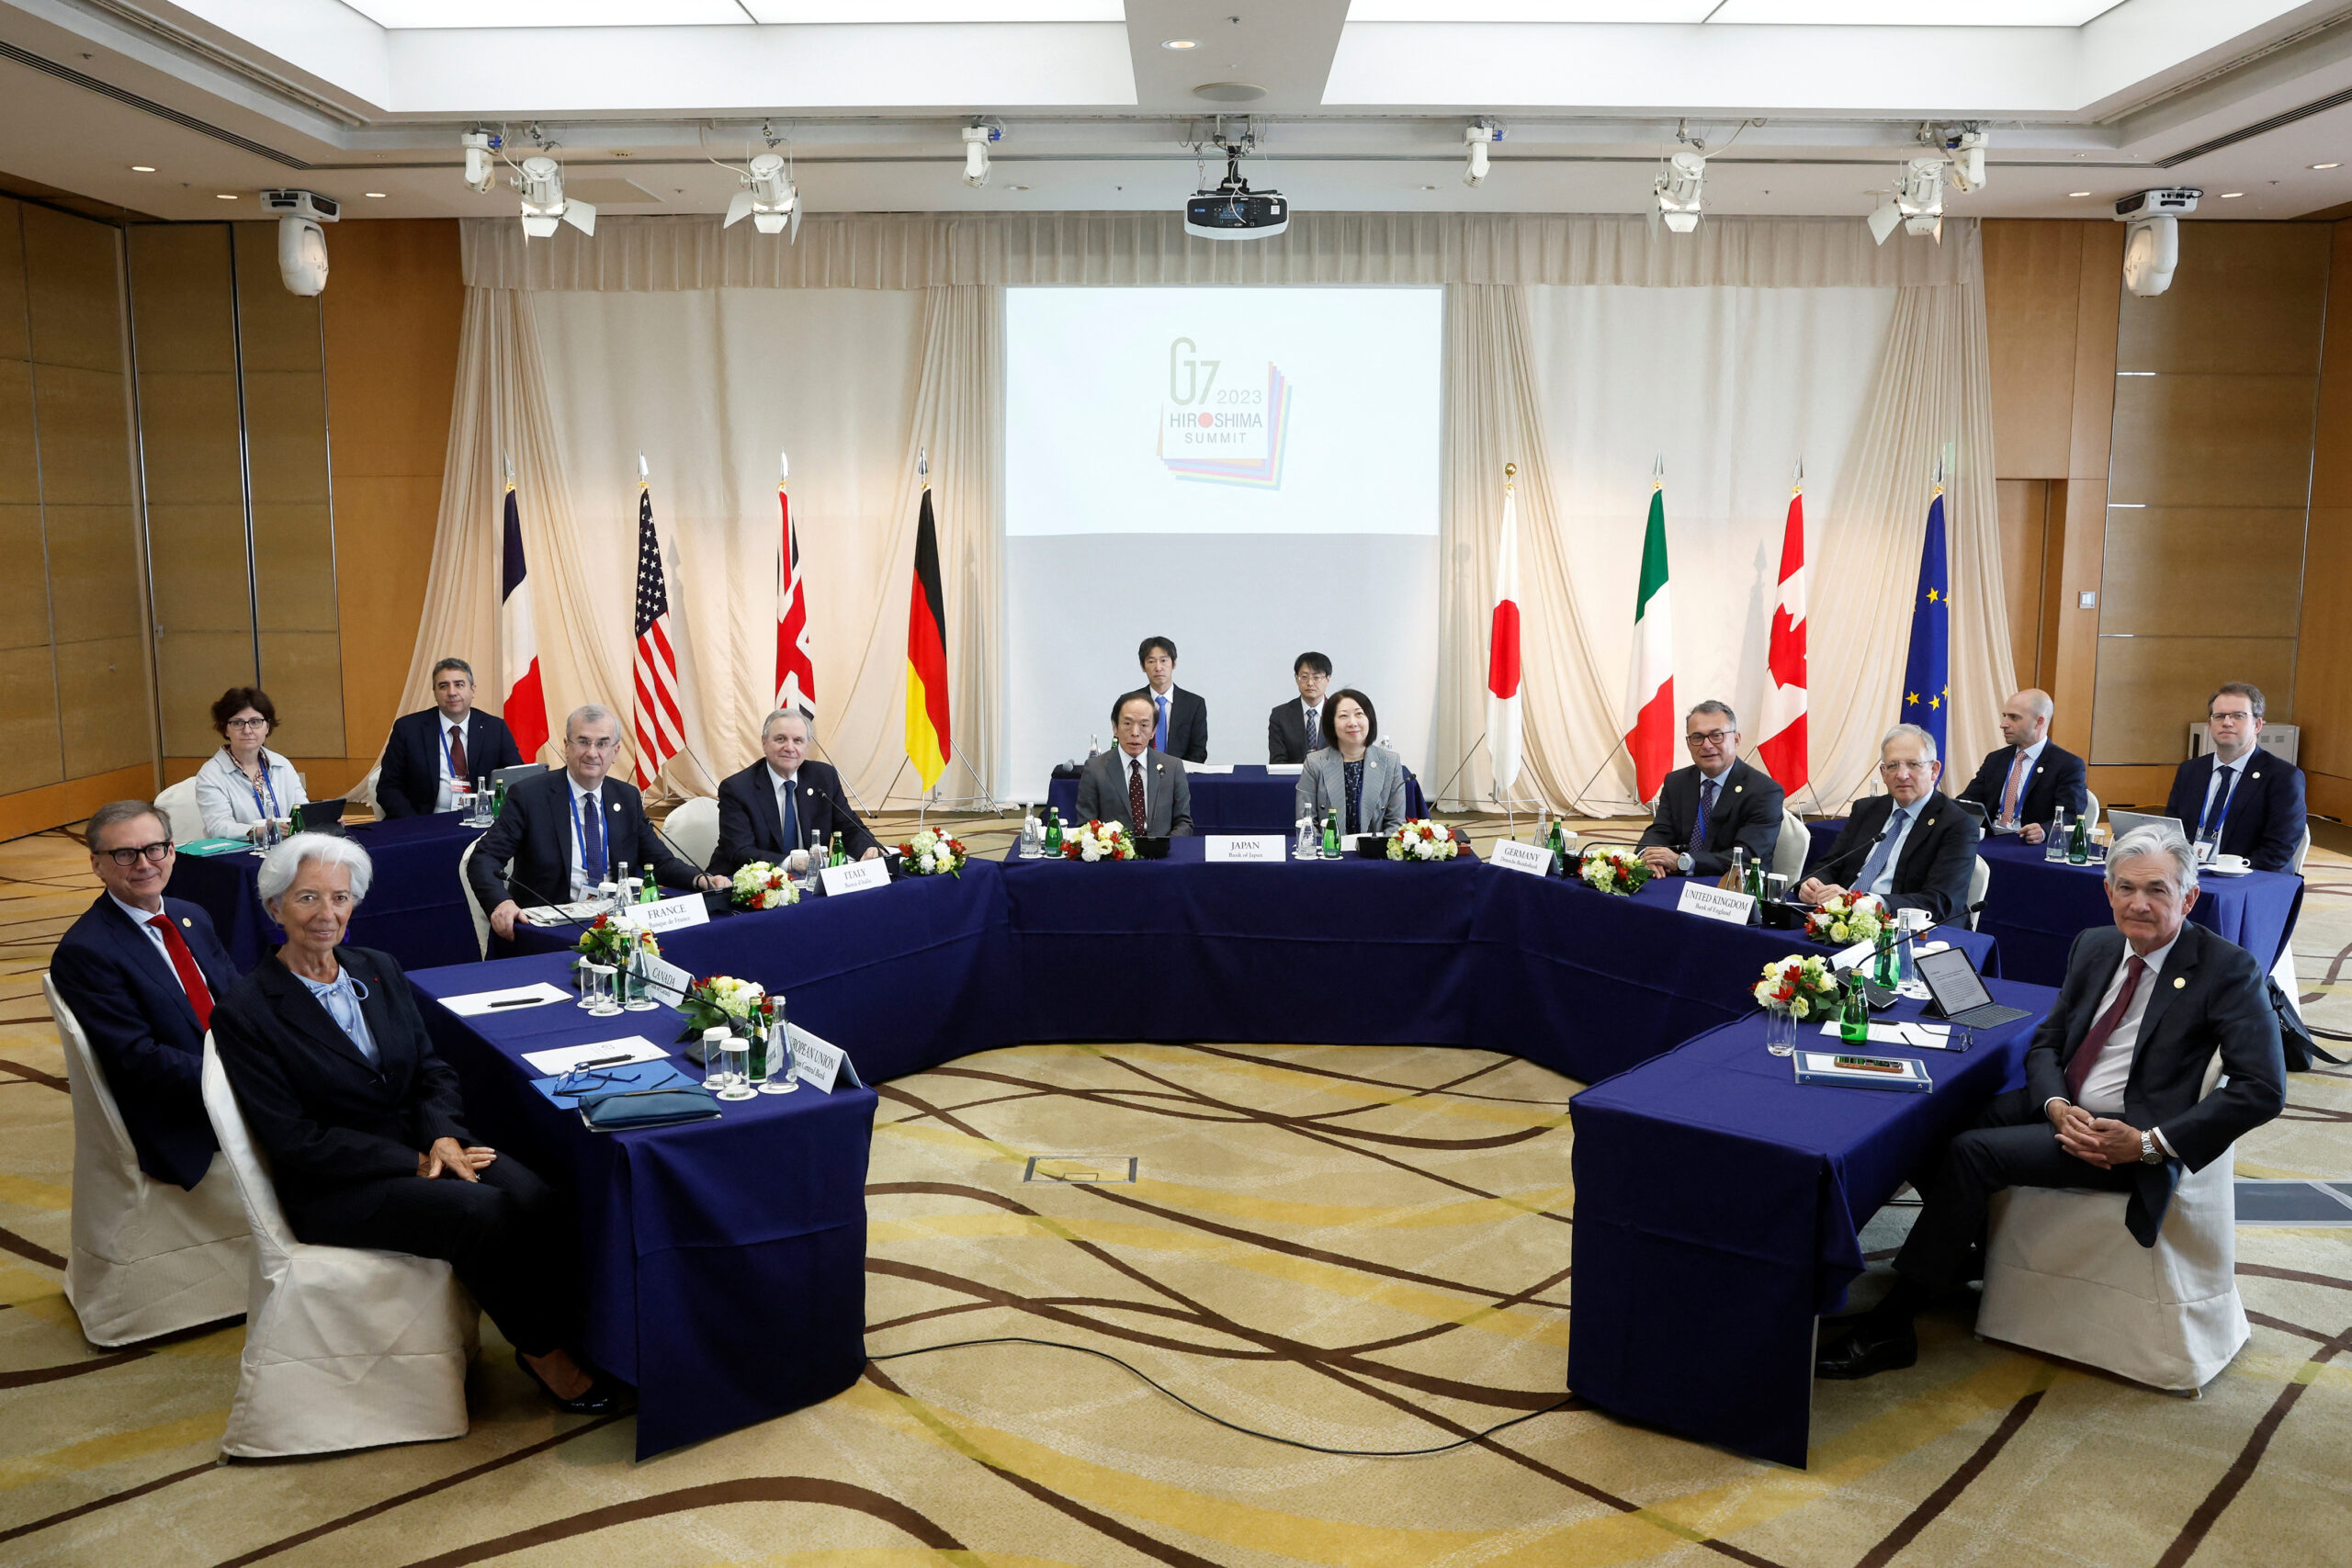  G7 finance chiefs warn of global uncertainty as US debt crisis looms